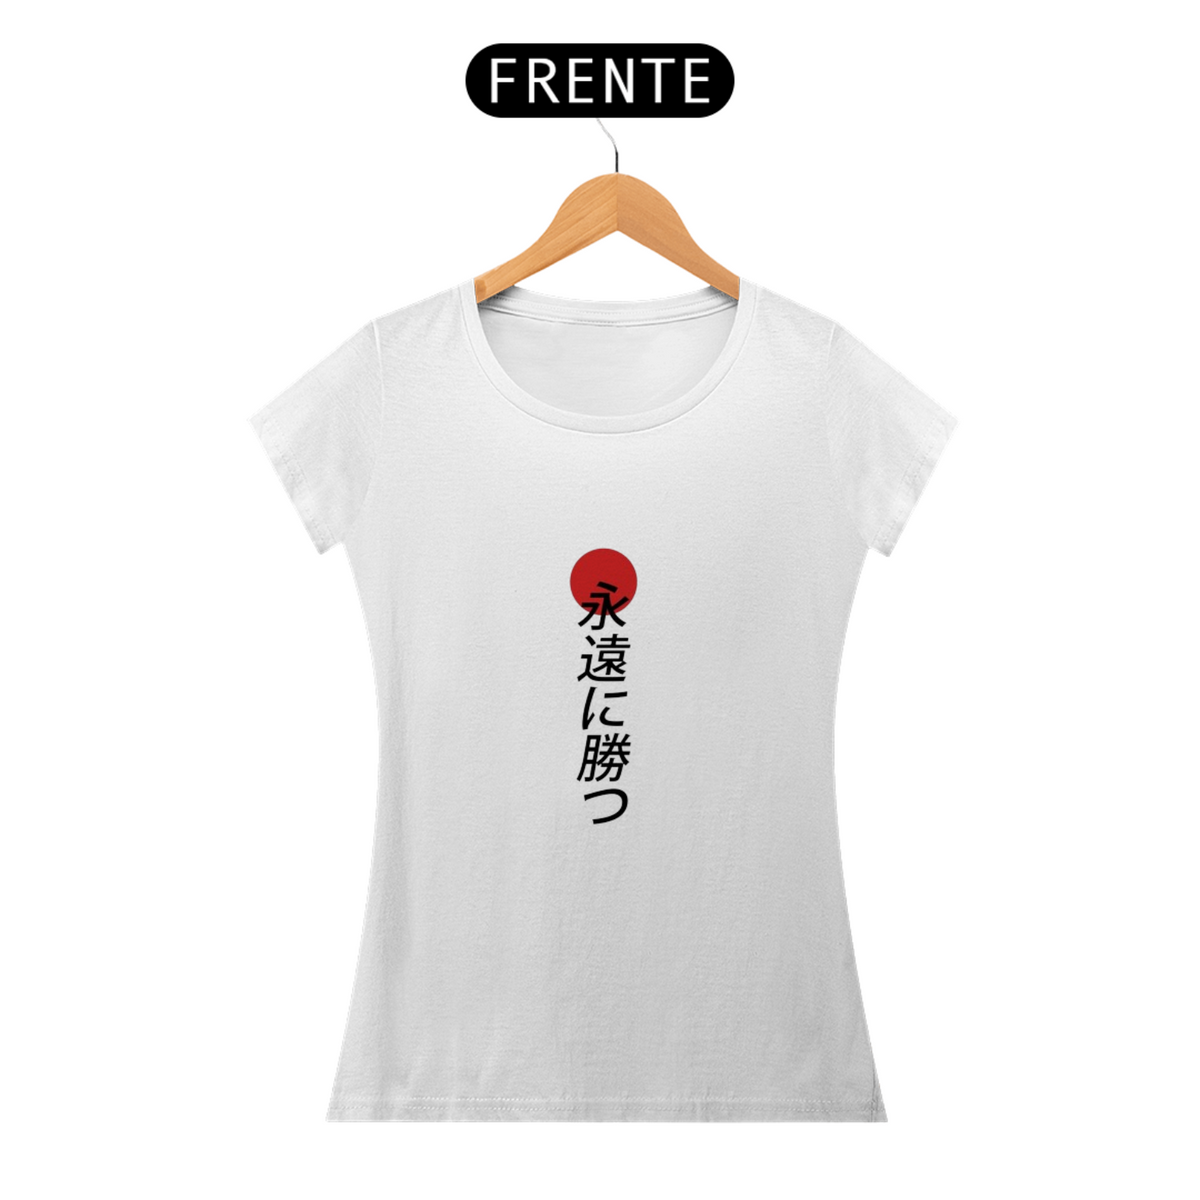 Nome do produto: Camiseta feminina arte japonesa escrita 